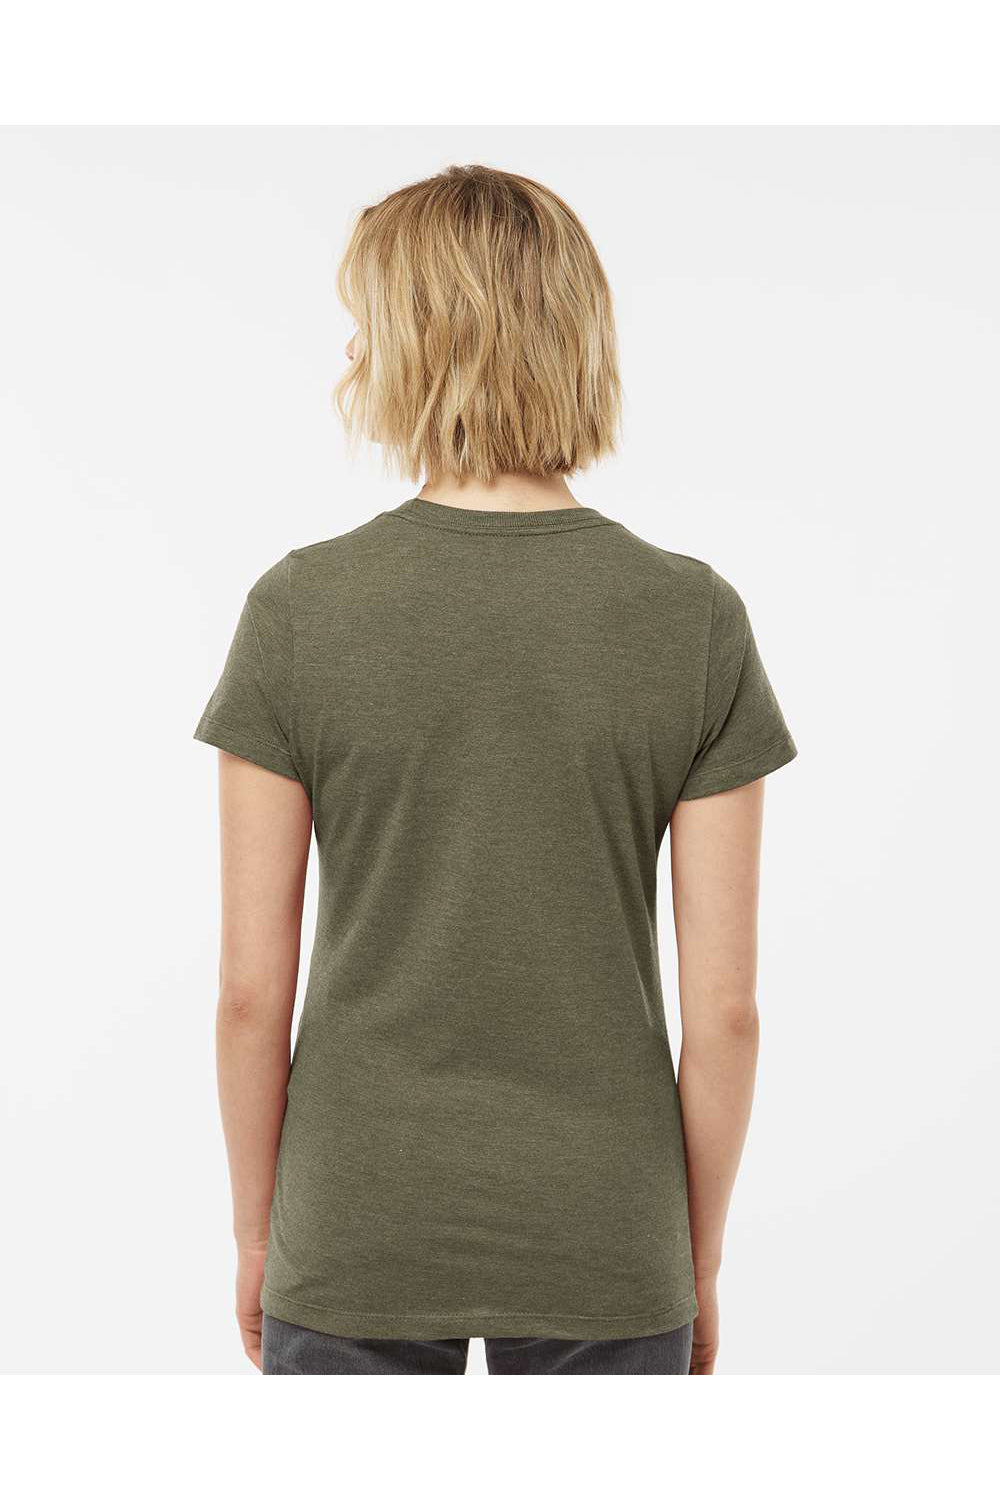 Tultex 542 Womens Premium Short Sleeve Crewneck T-Shirt Heather Olive Green Model Back